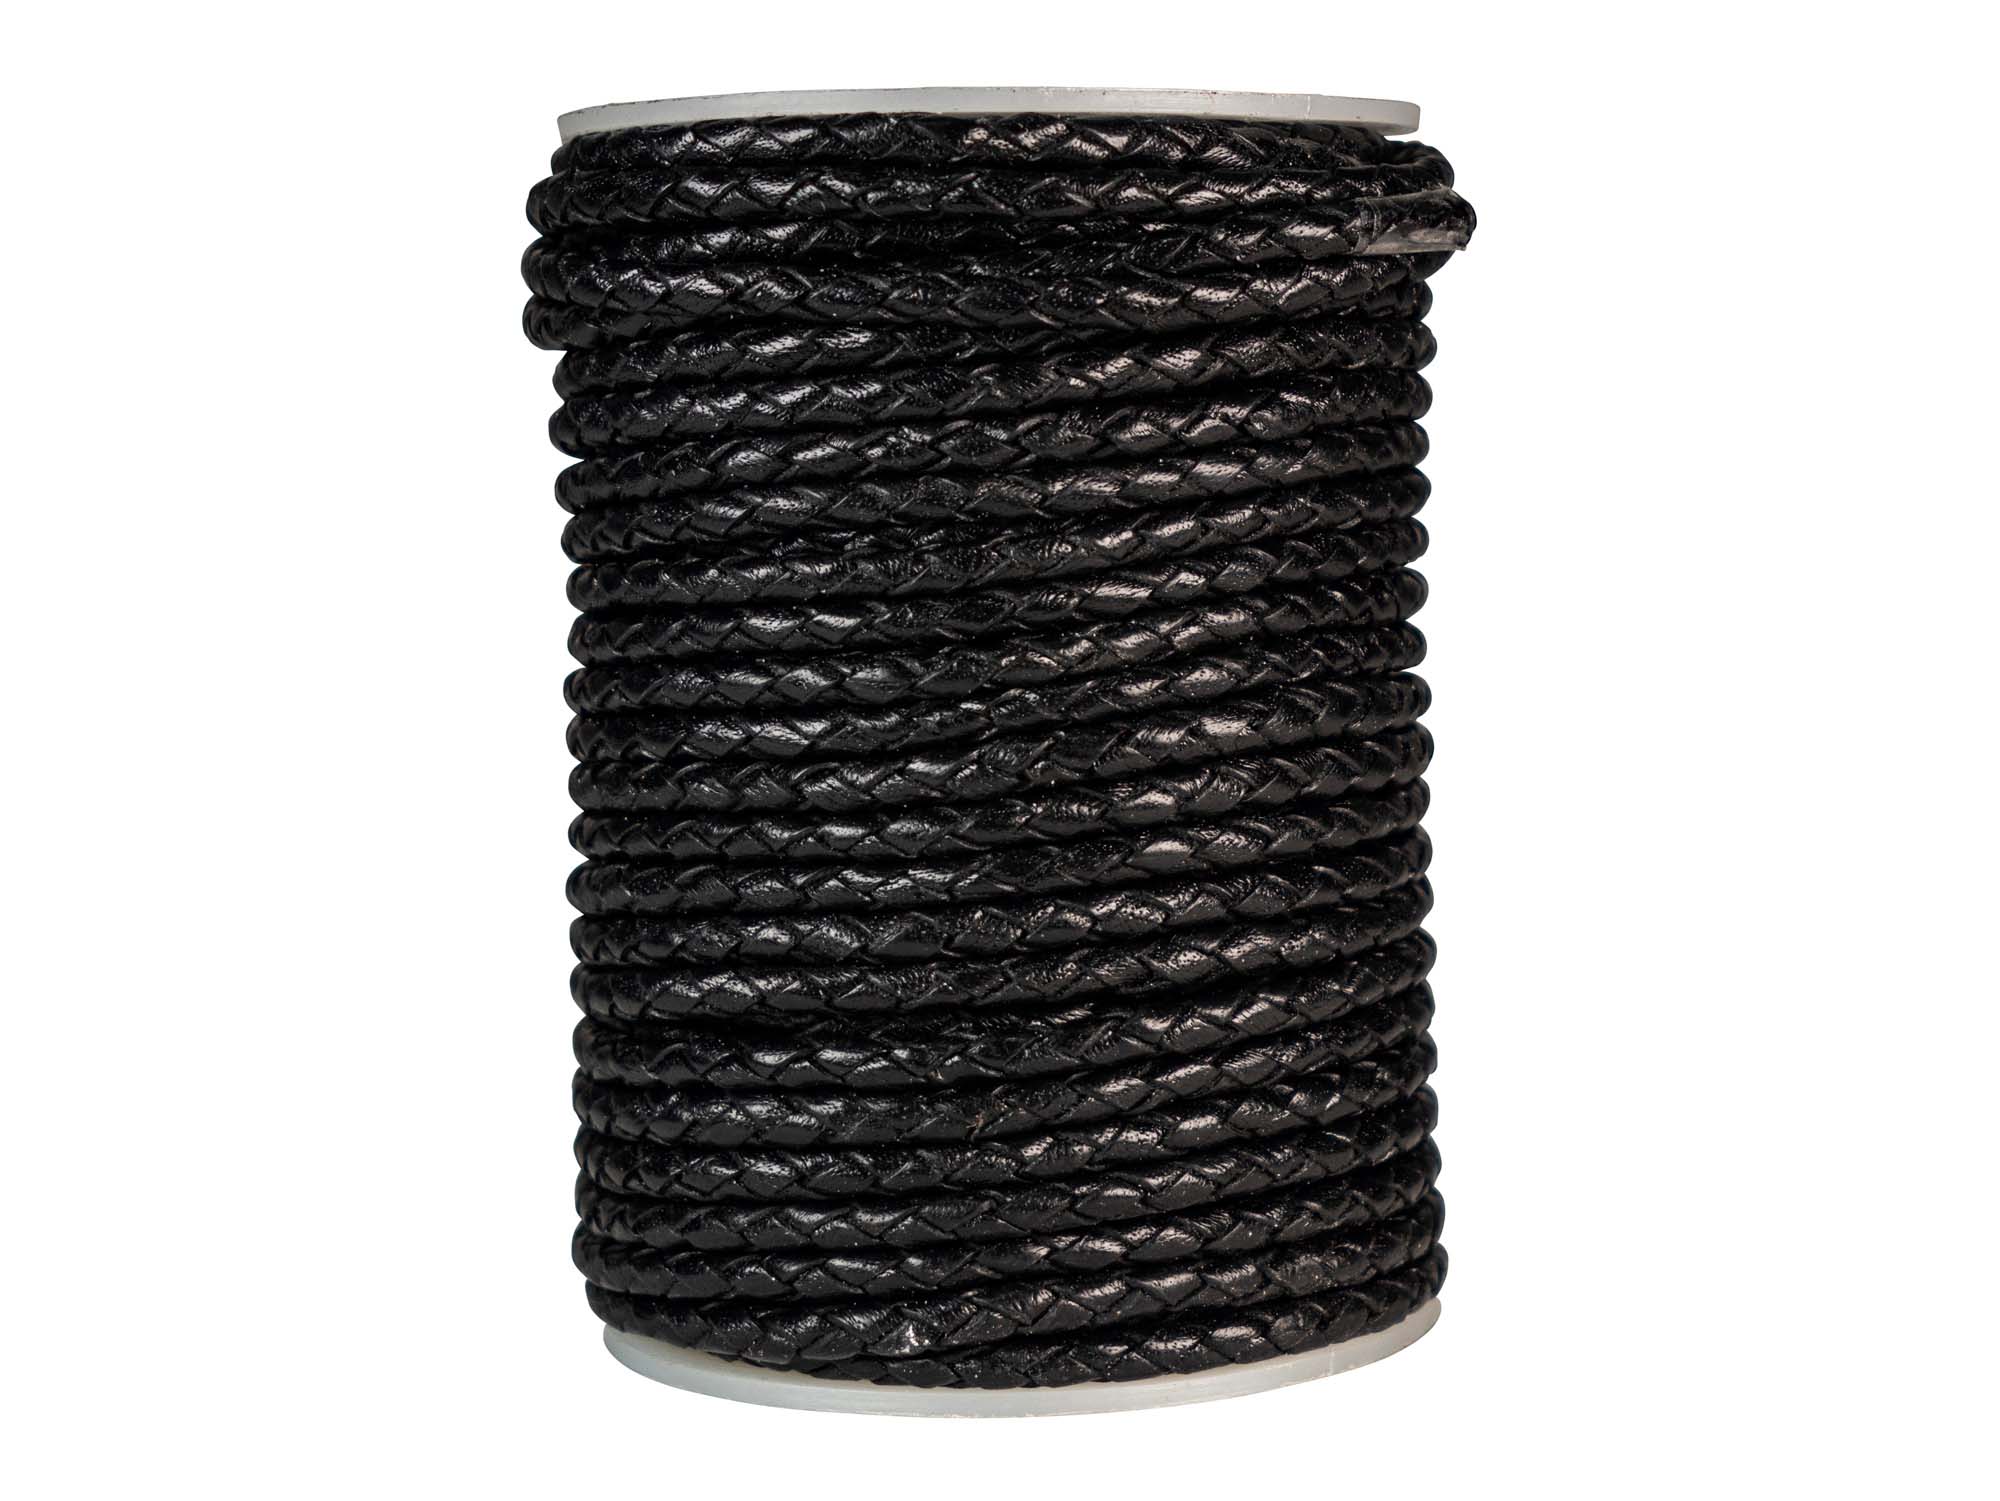 Braided Leather Cord 4mm x 25m: Black - 297C-BL40x25BK (8UW6)